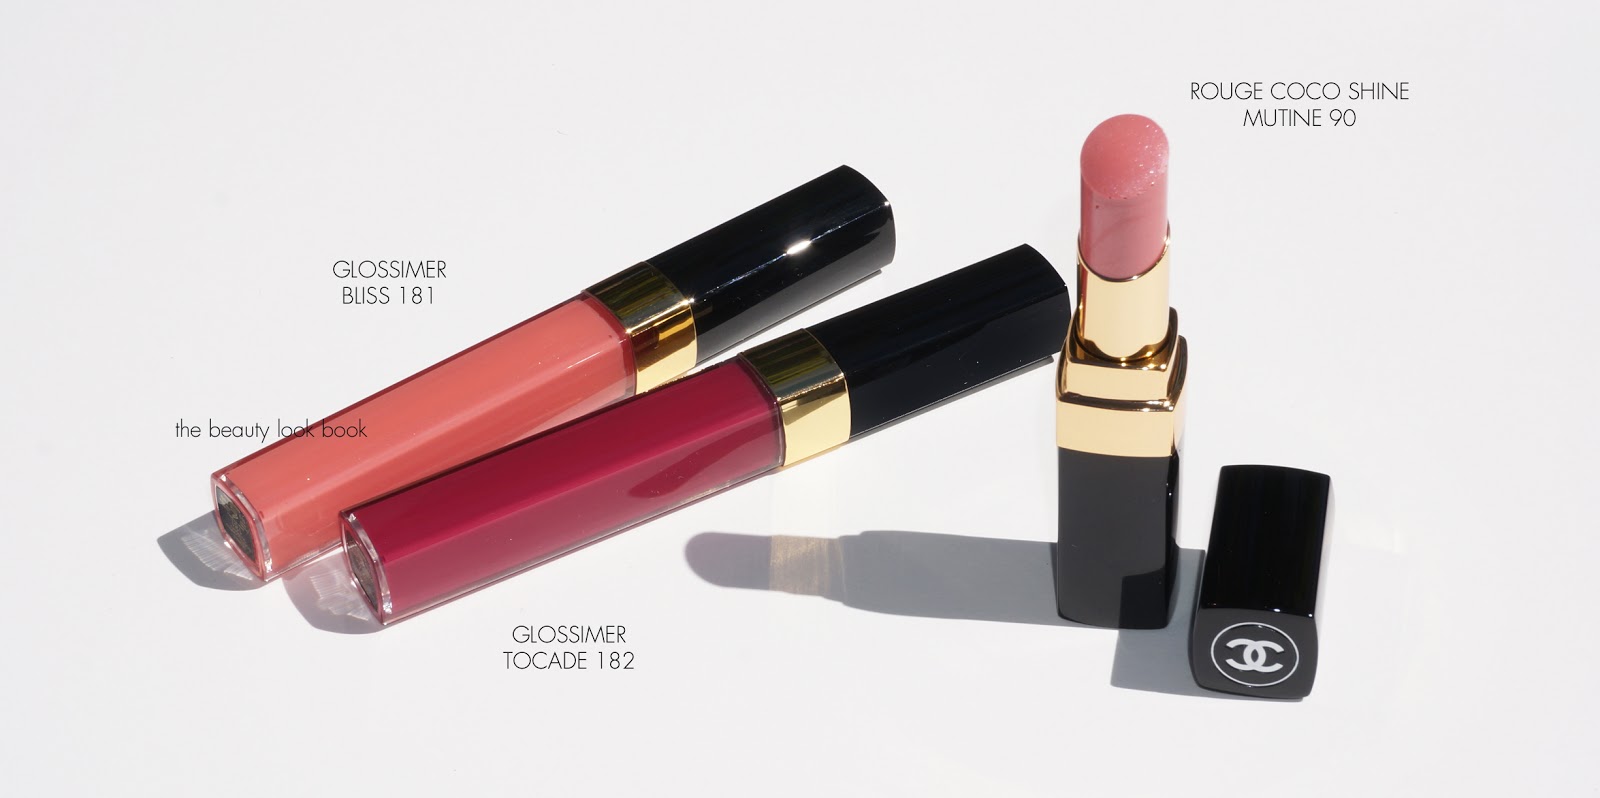 Chanel Rouge Coco Shine Lipstick: Chanel's Newest Lipstick